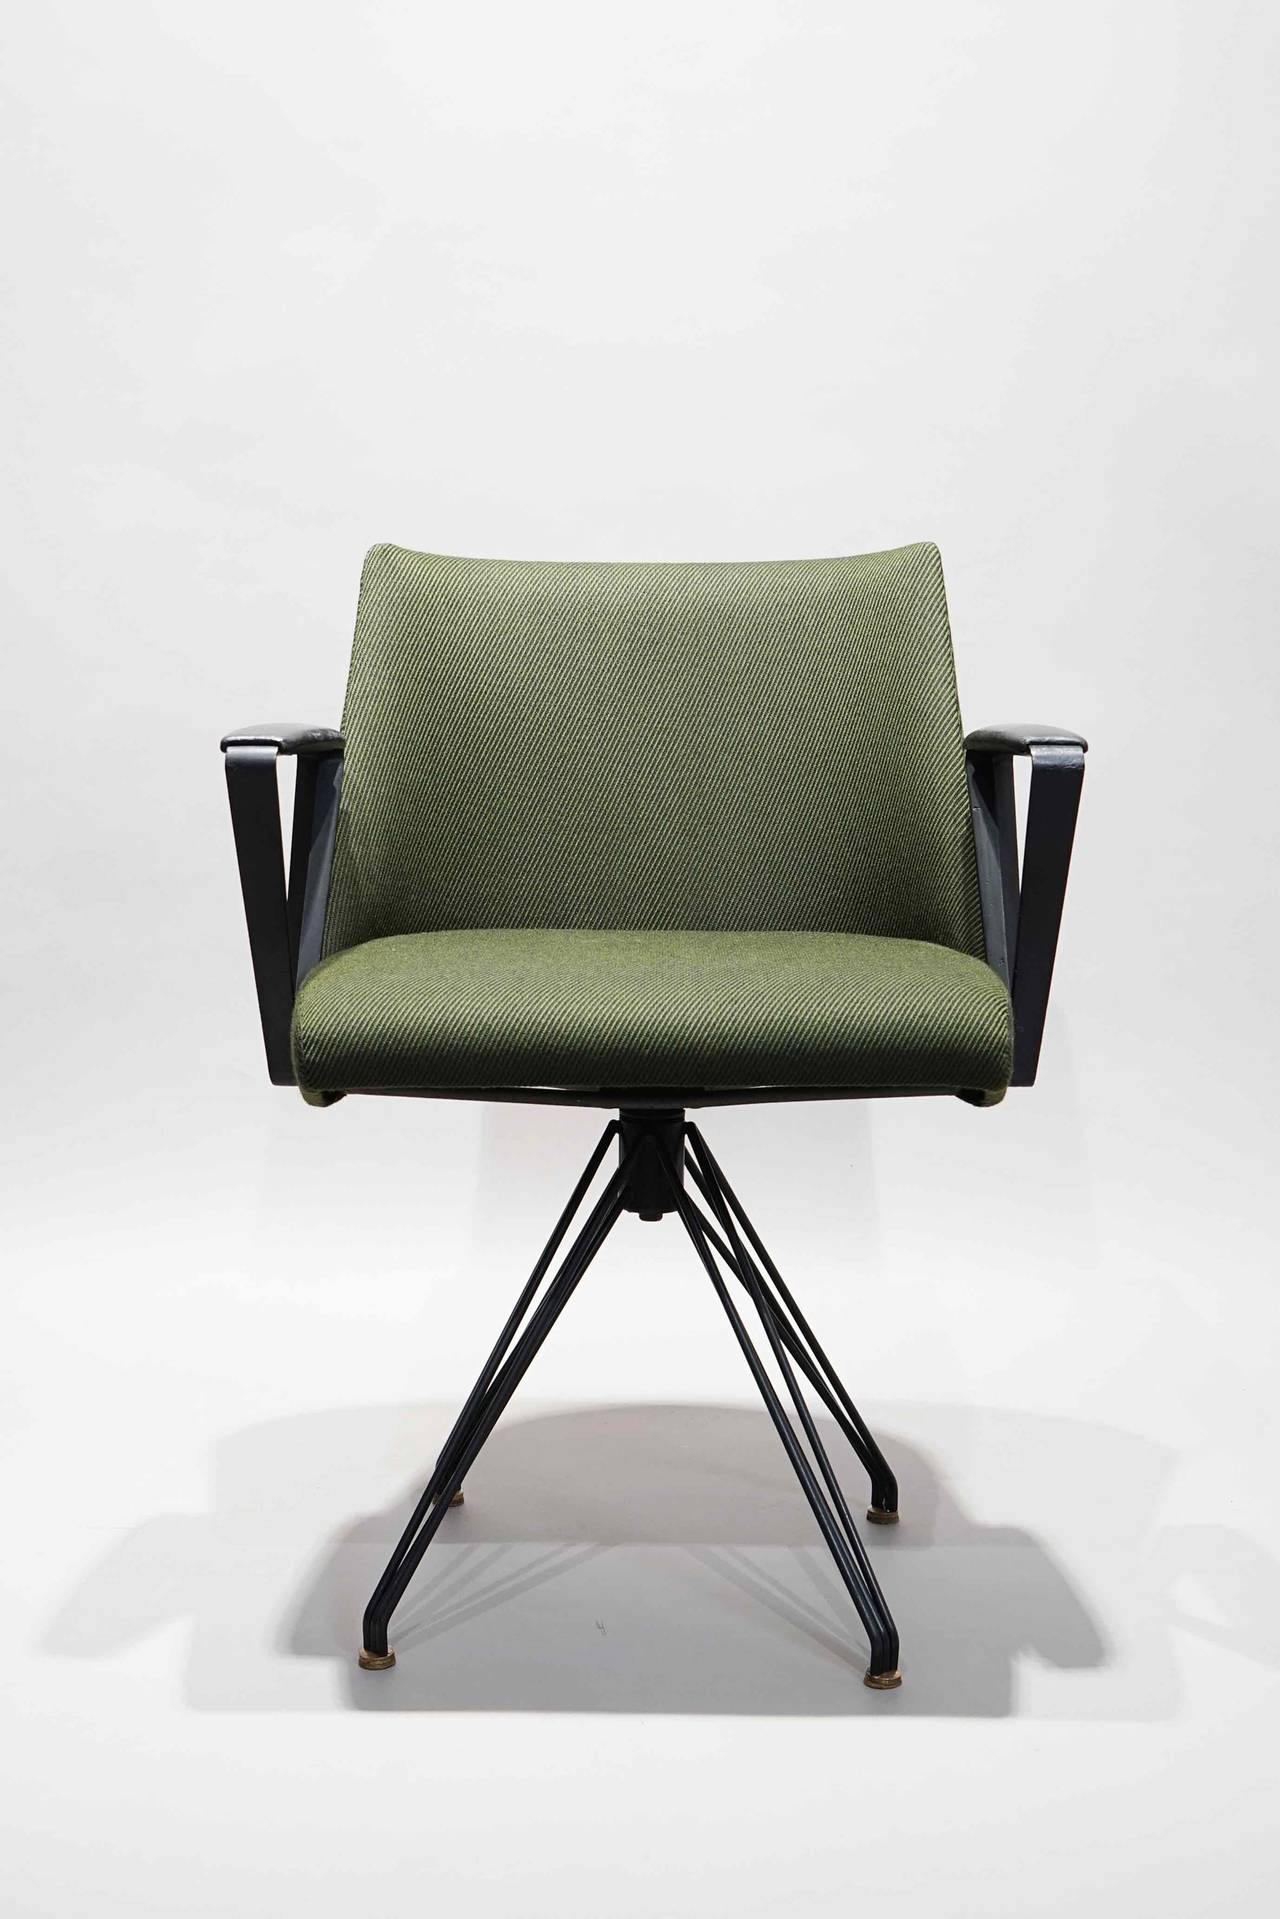 Mid-Century Modern Swivel chair S88 by Osvaldo Borsani, Tecno Milano 1957